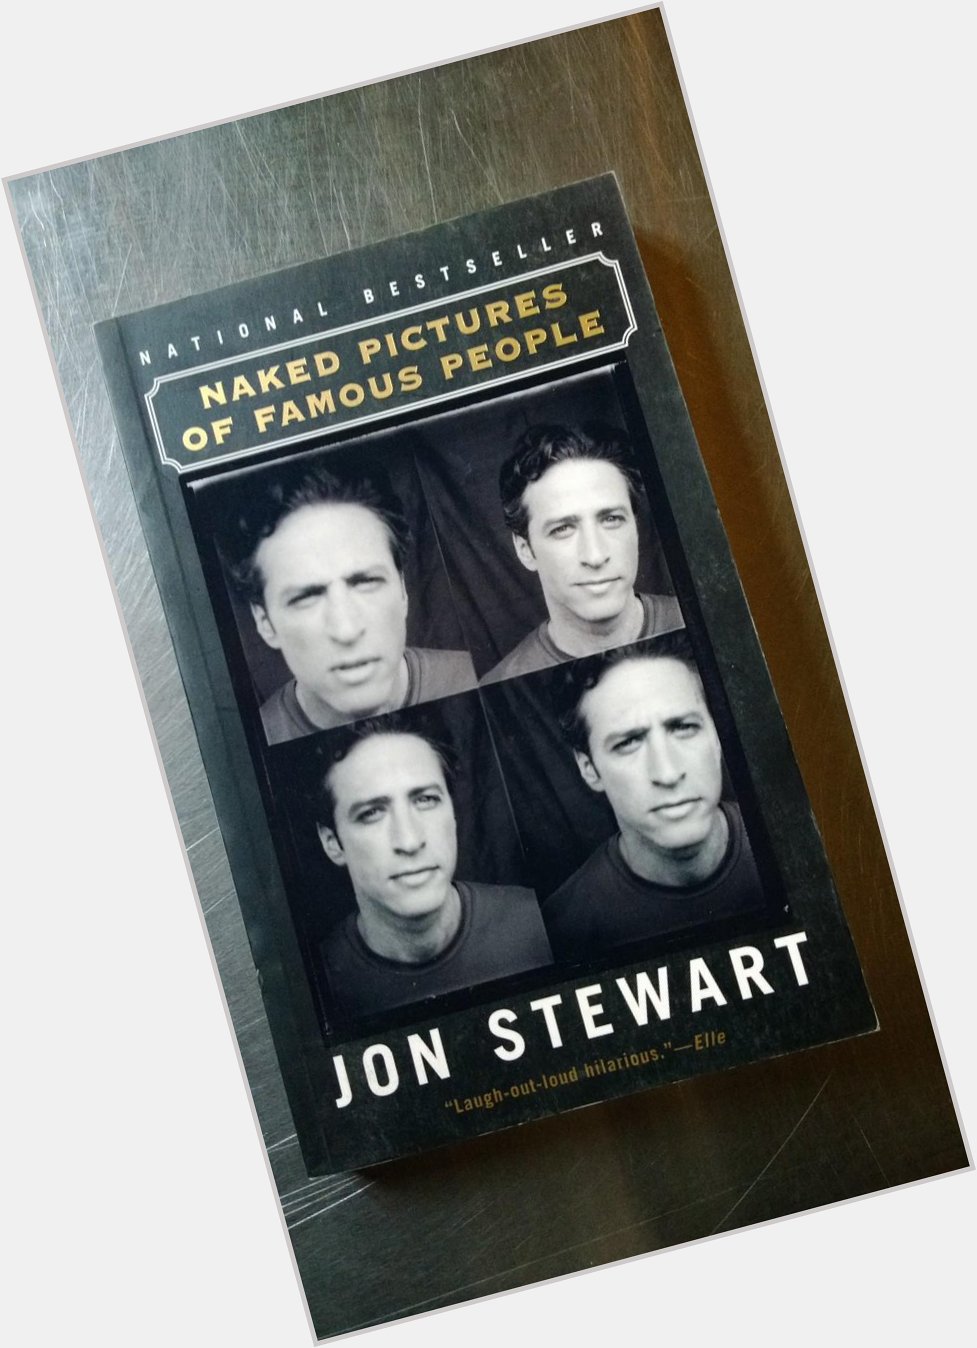 Happy Birthday to Jon Stewart! 